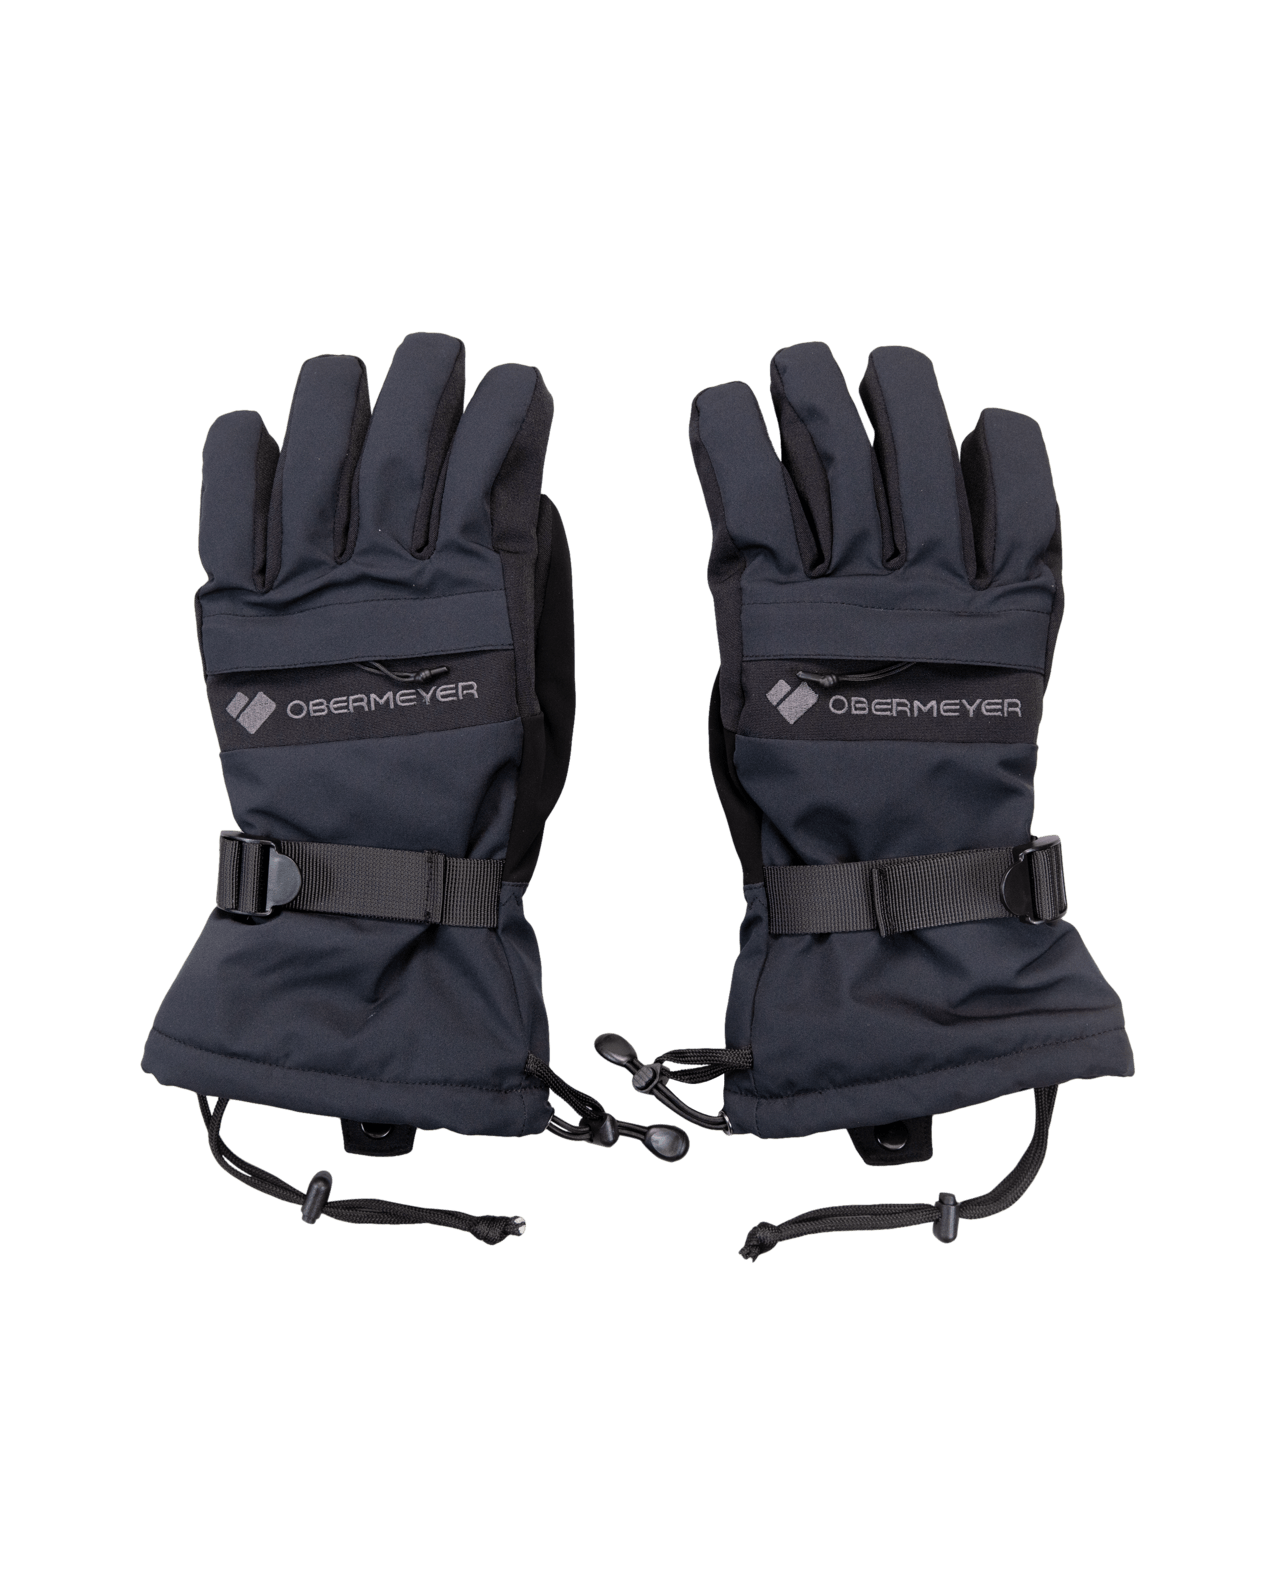 Obermeyer Men's Regulator Glove